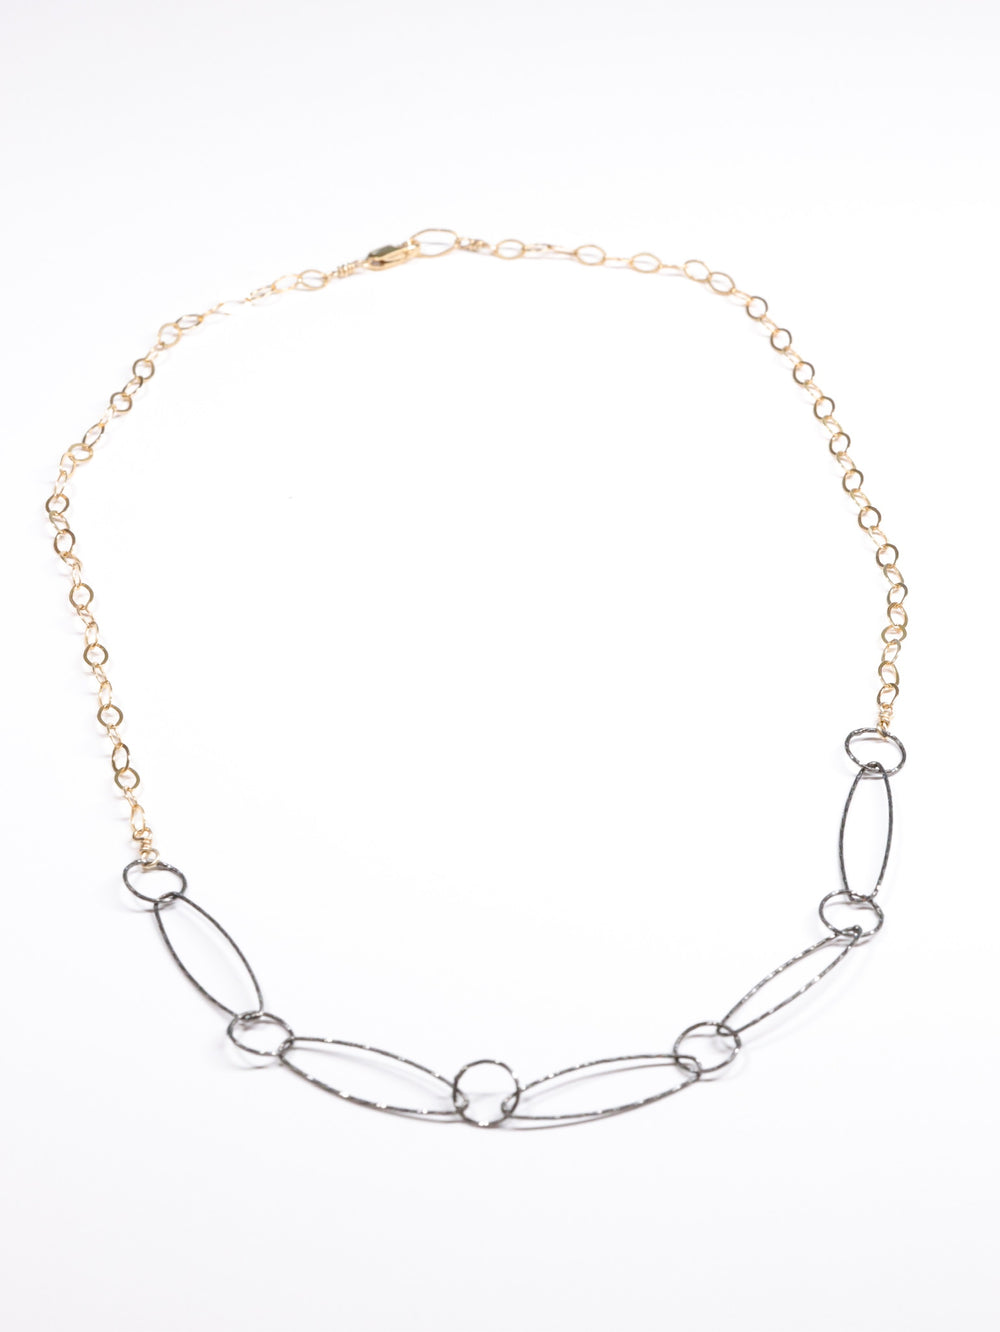 5 links nh necklace -Black & Gold